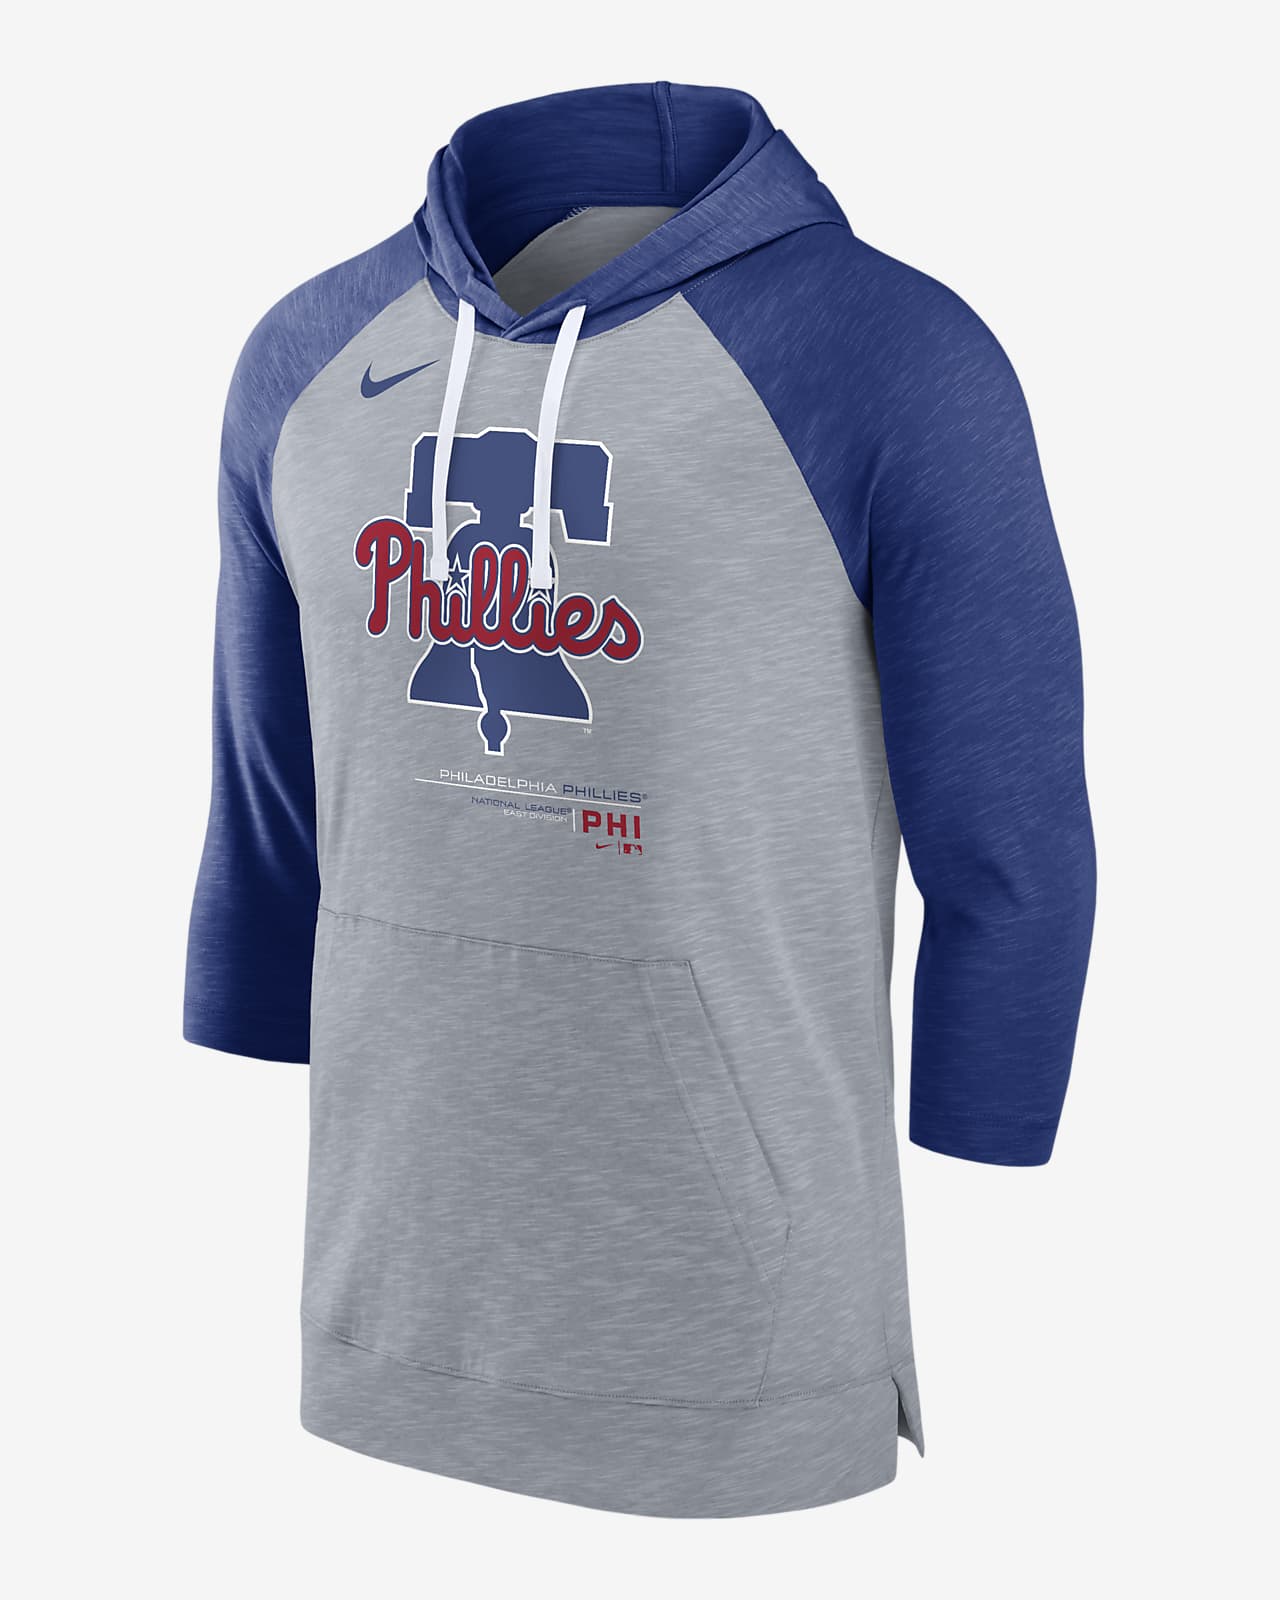 Nike Baseball (MLB Philadelphia Phillies) Men's 3/4-Sleeve Pullover Hoodie